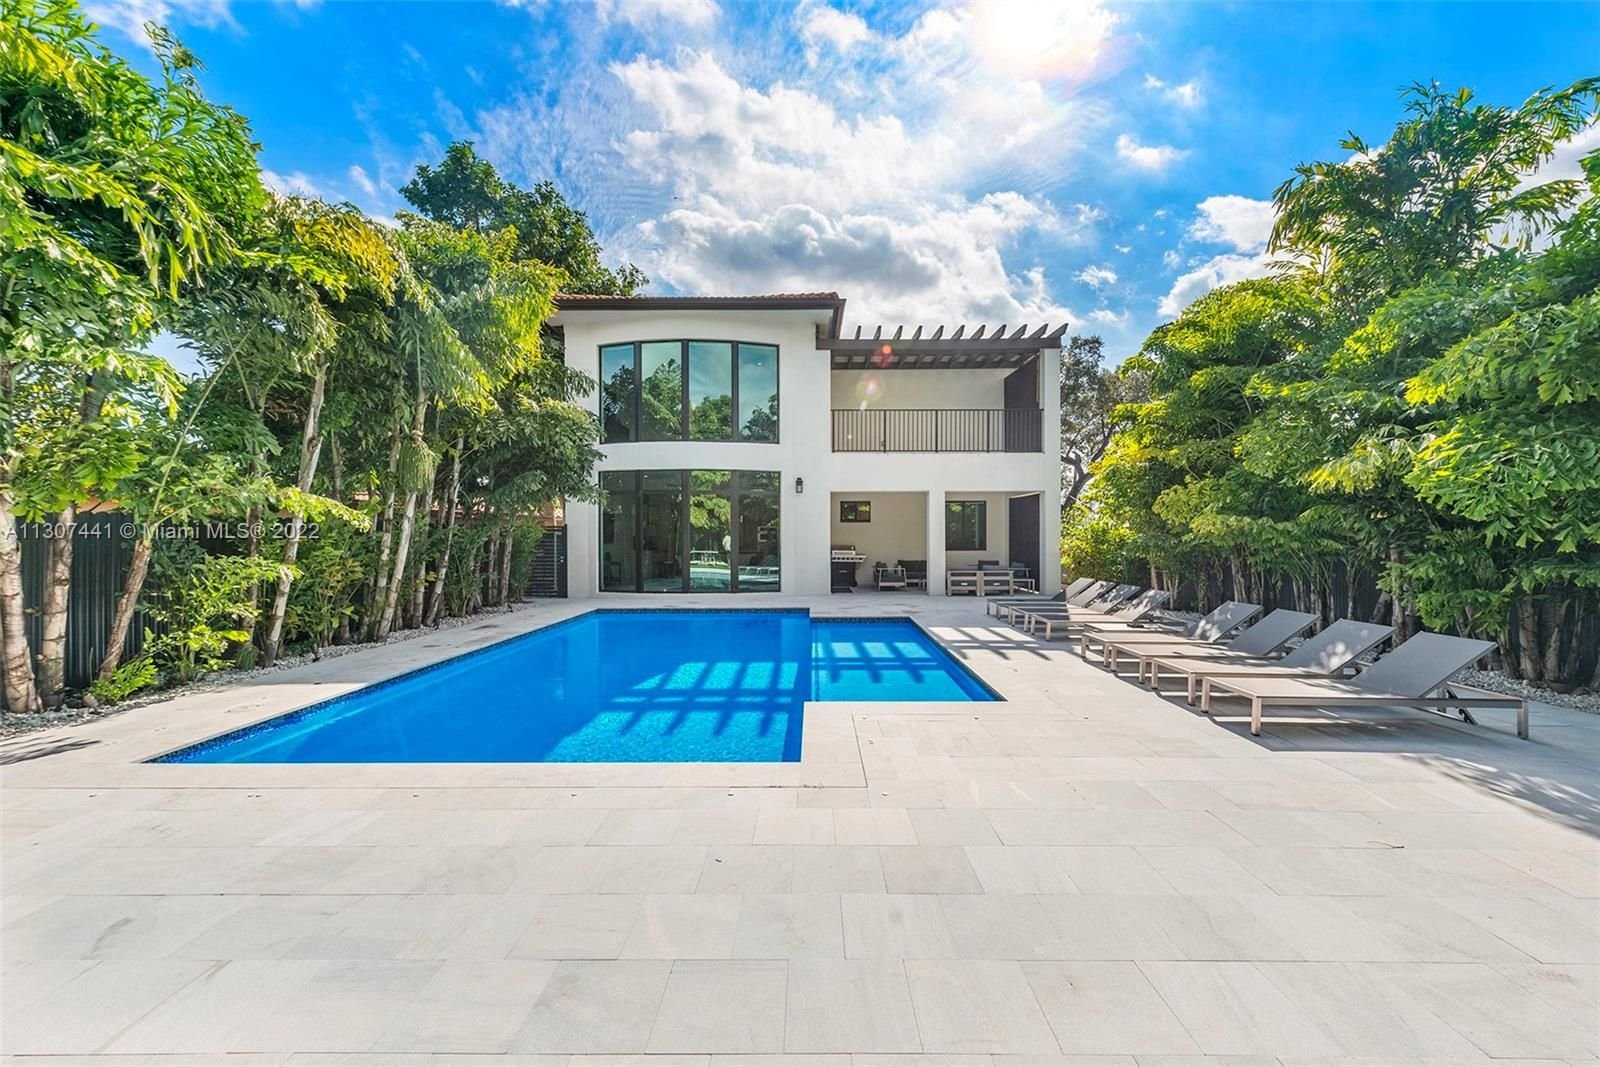 Real estate property located at 6529 30th St, Miami-Dade County, Miami, FL